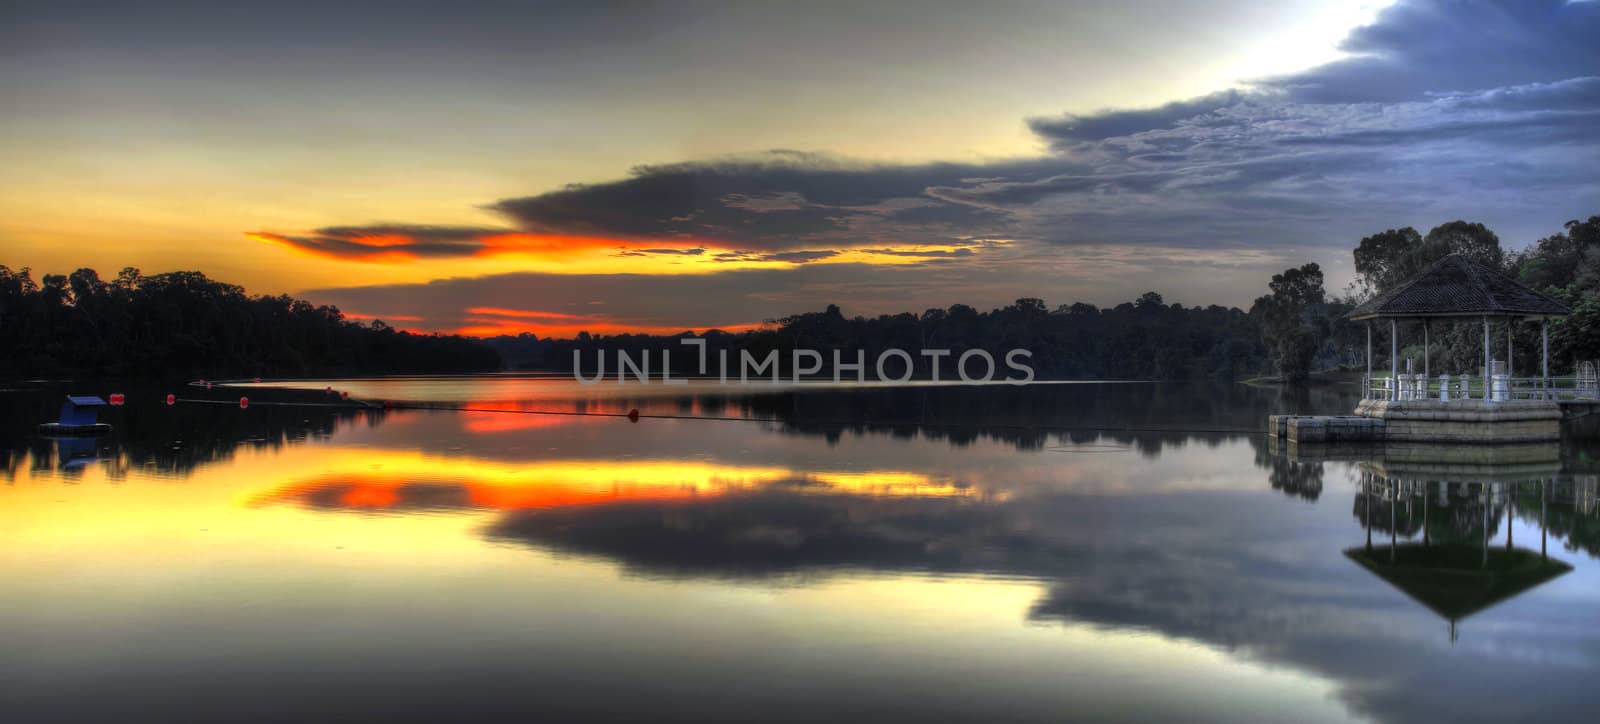 Sunset at the Lake Panorama by Davidgn